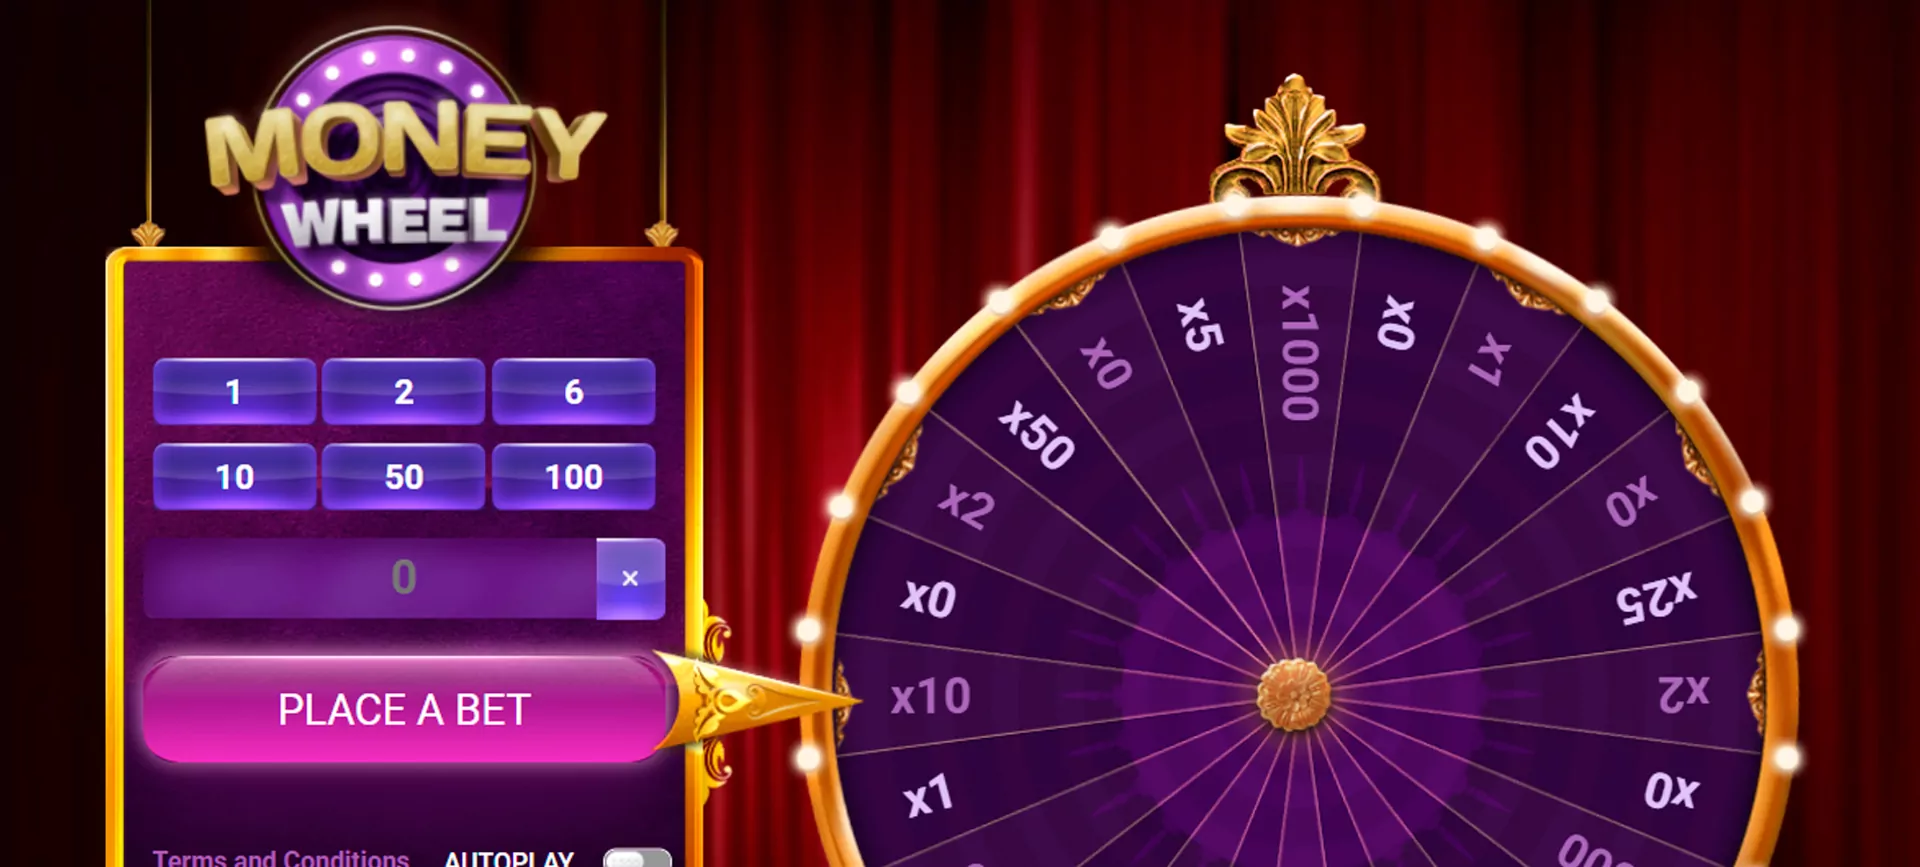 Play online in the Money Wheel.